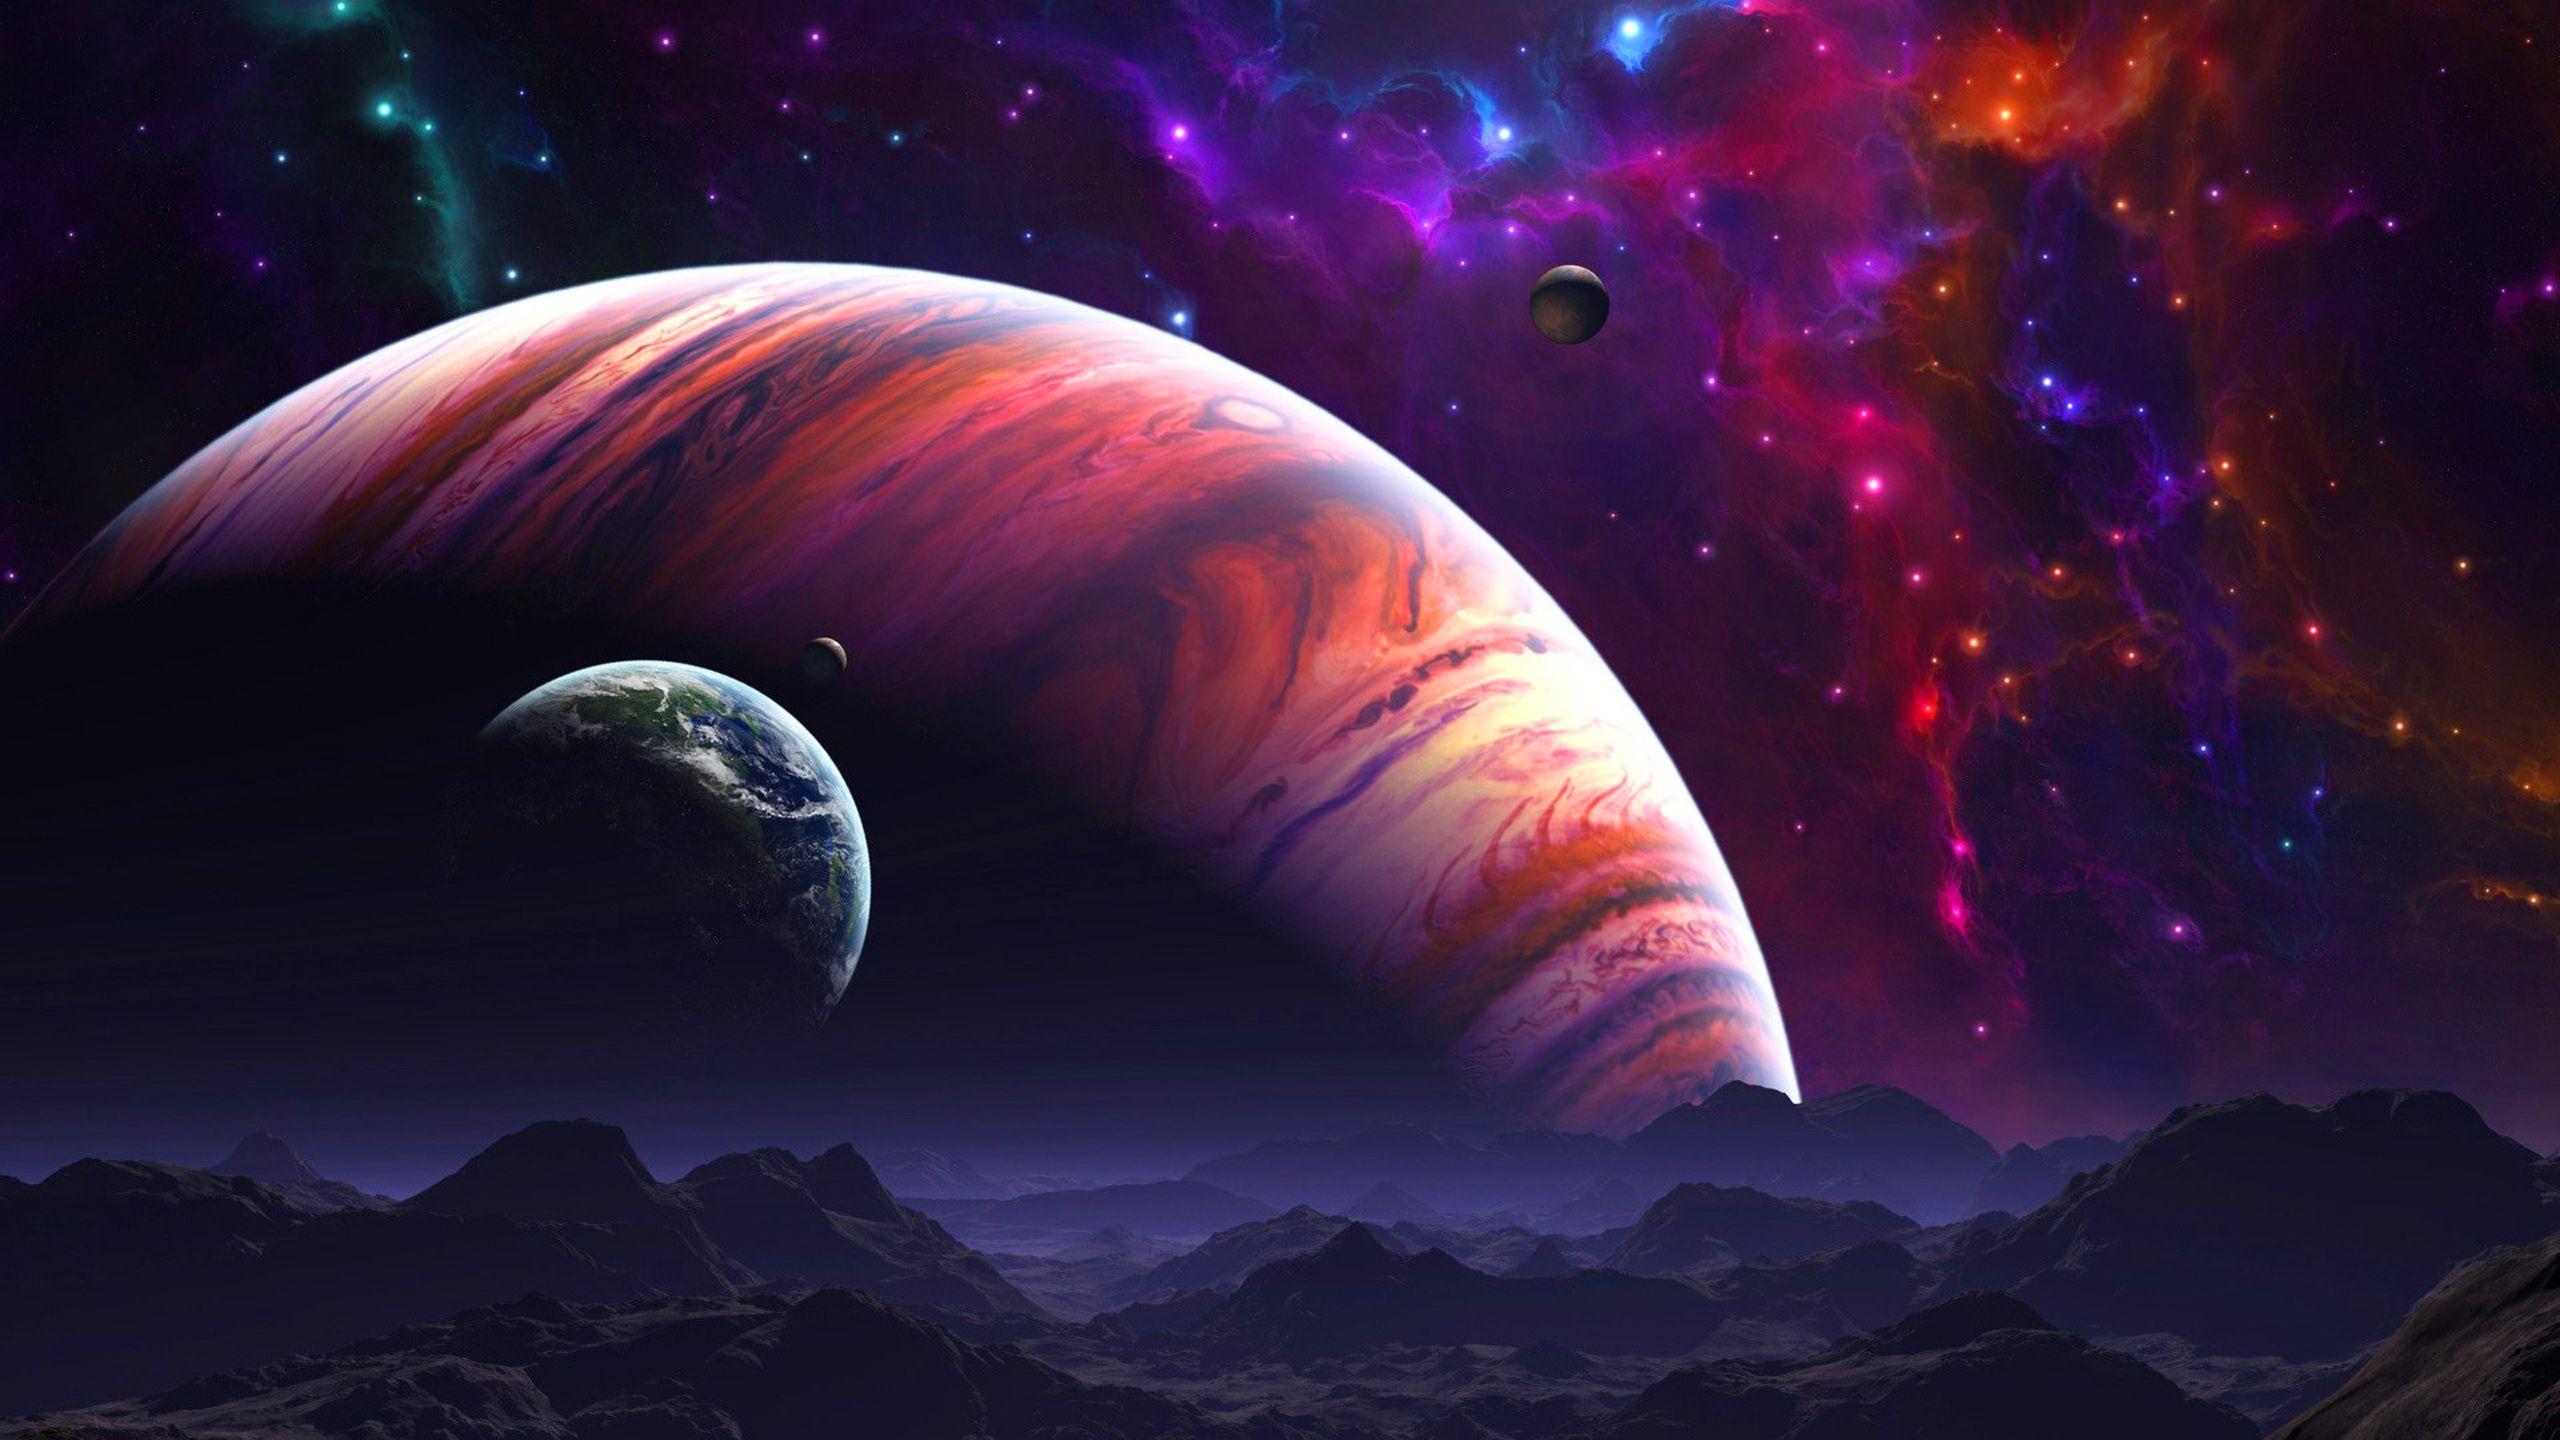 Beautiful Space Art Wallpapers - Top Free Beautiful Space Art